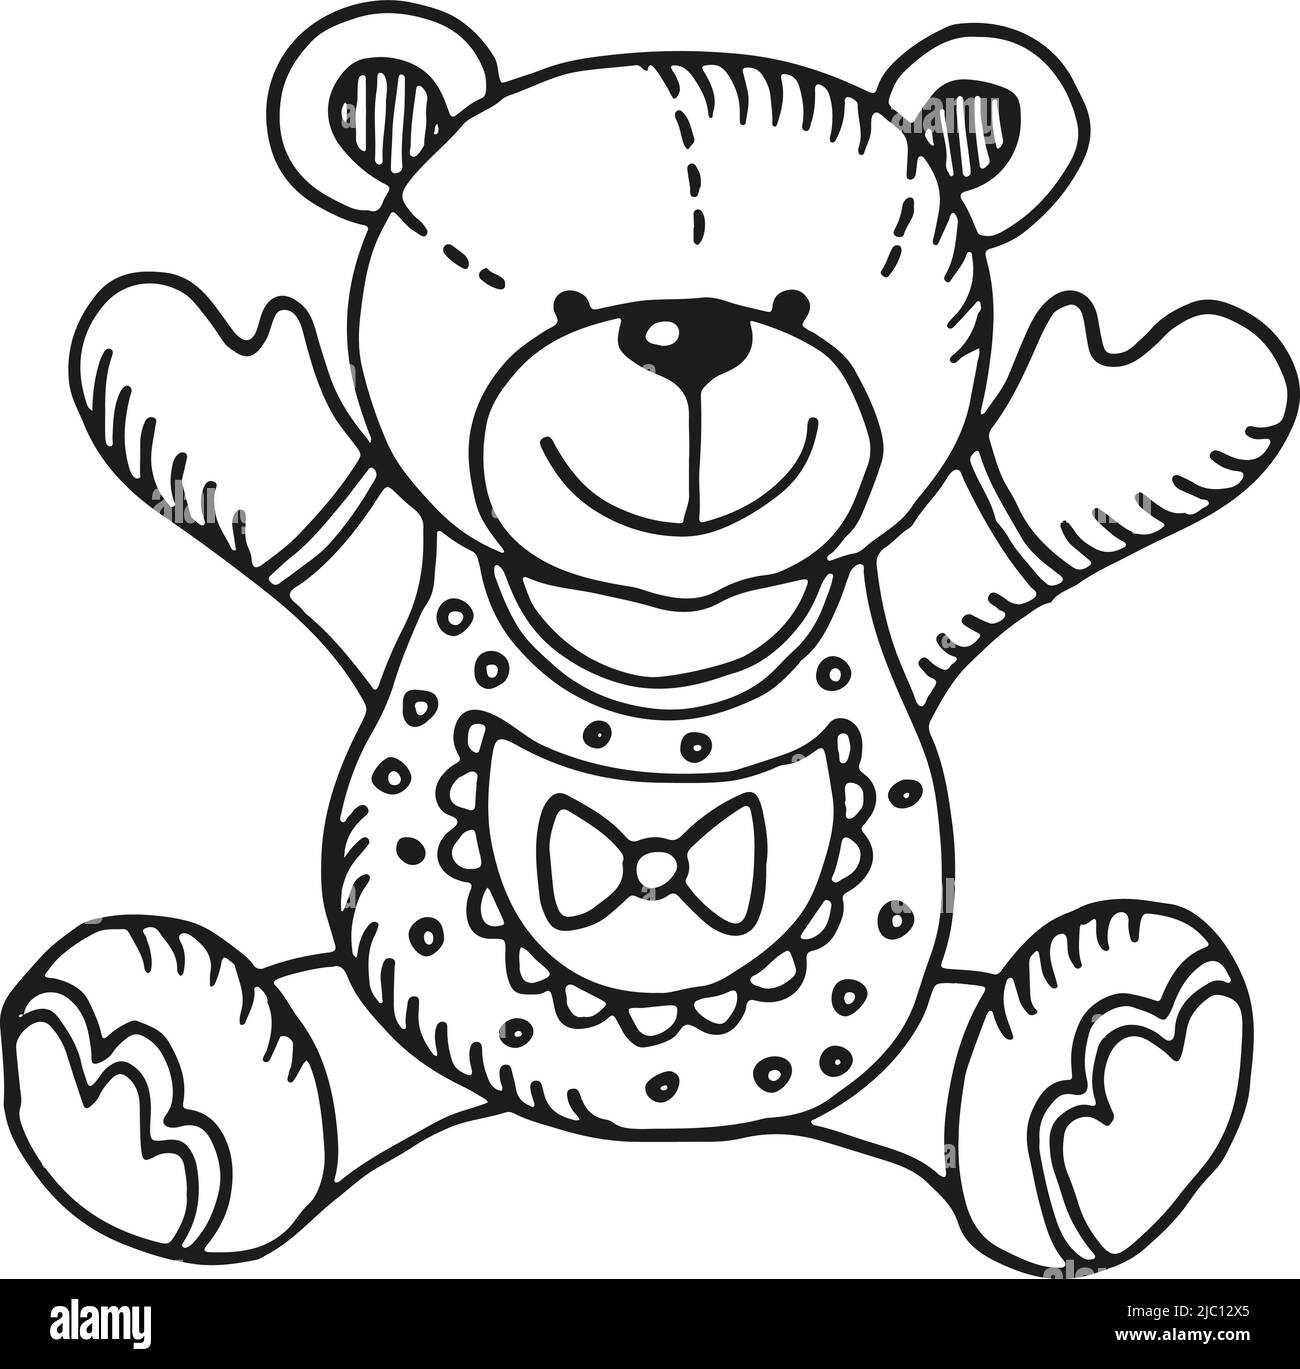 Teddy bear icon. Hand drawn soft toy Stock Vector